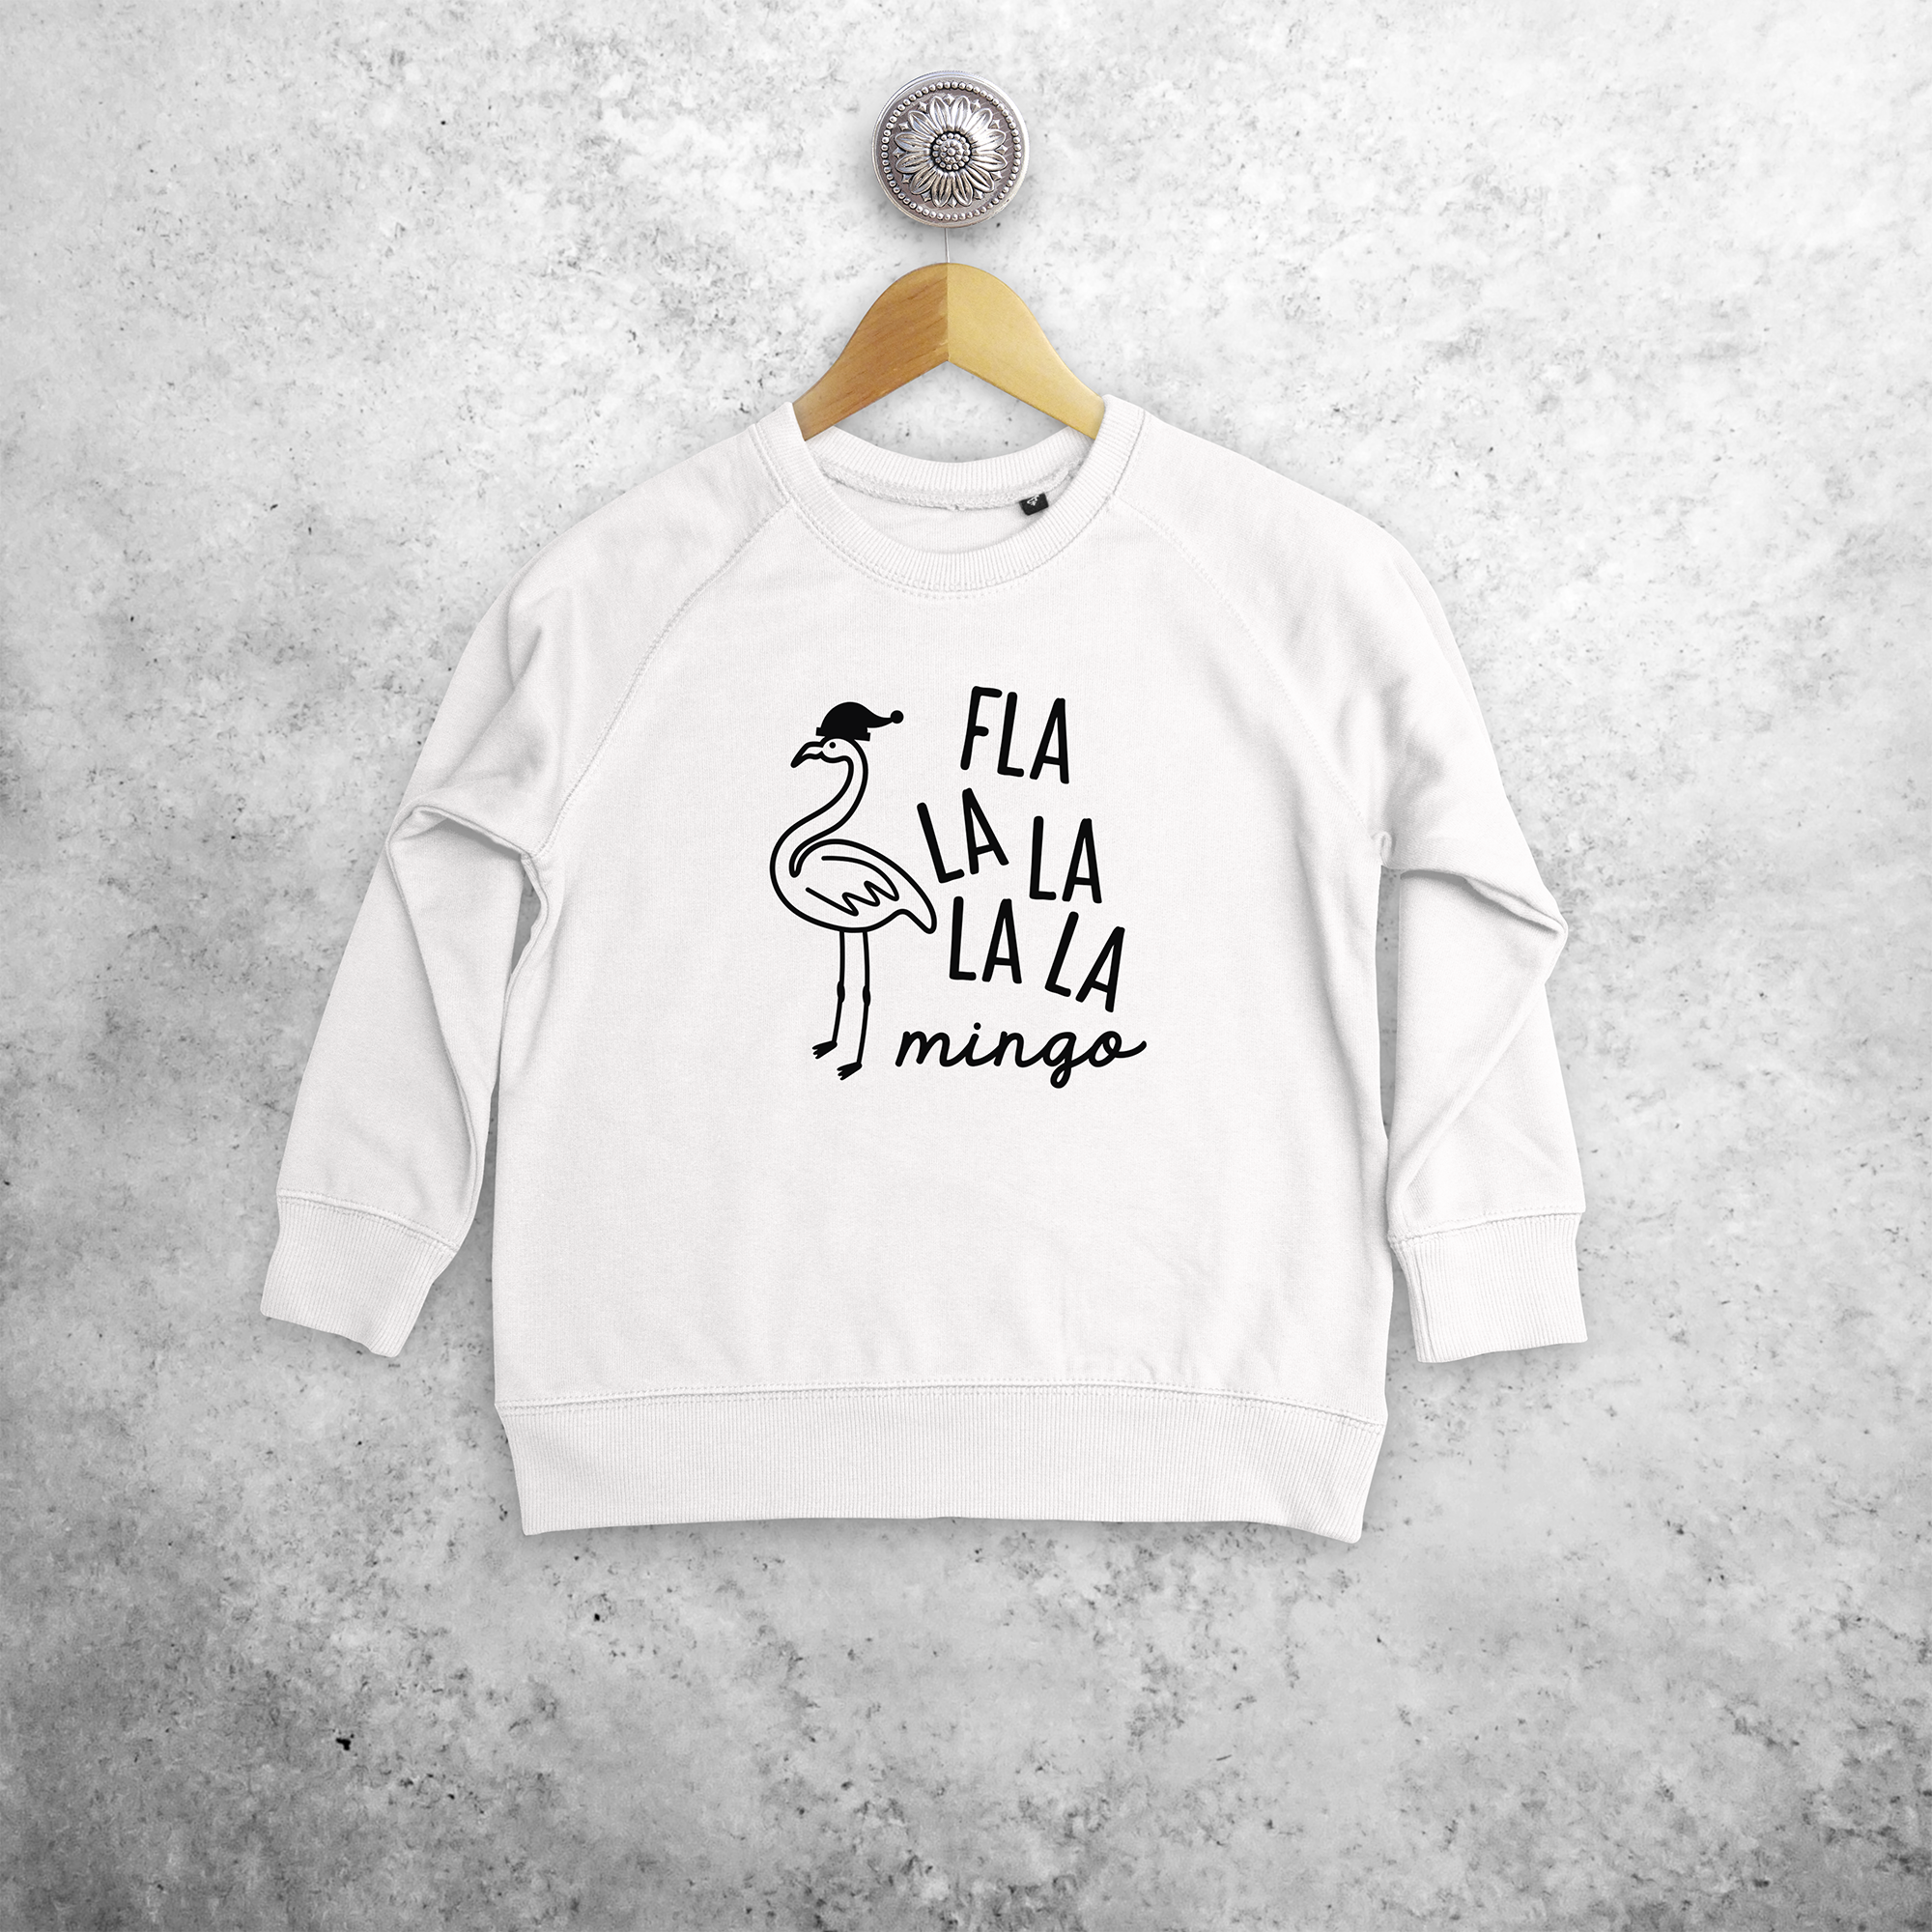 Kids sweater, with ‘Fla la la la la mingo’ print by KMLeon.